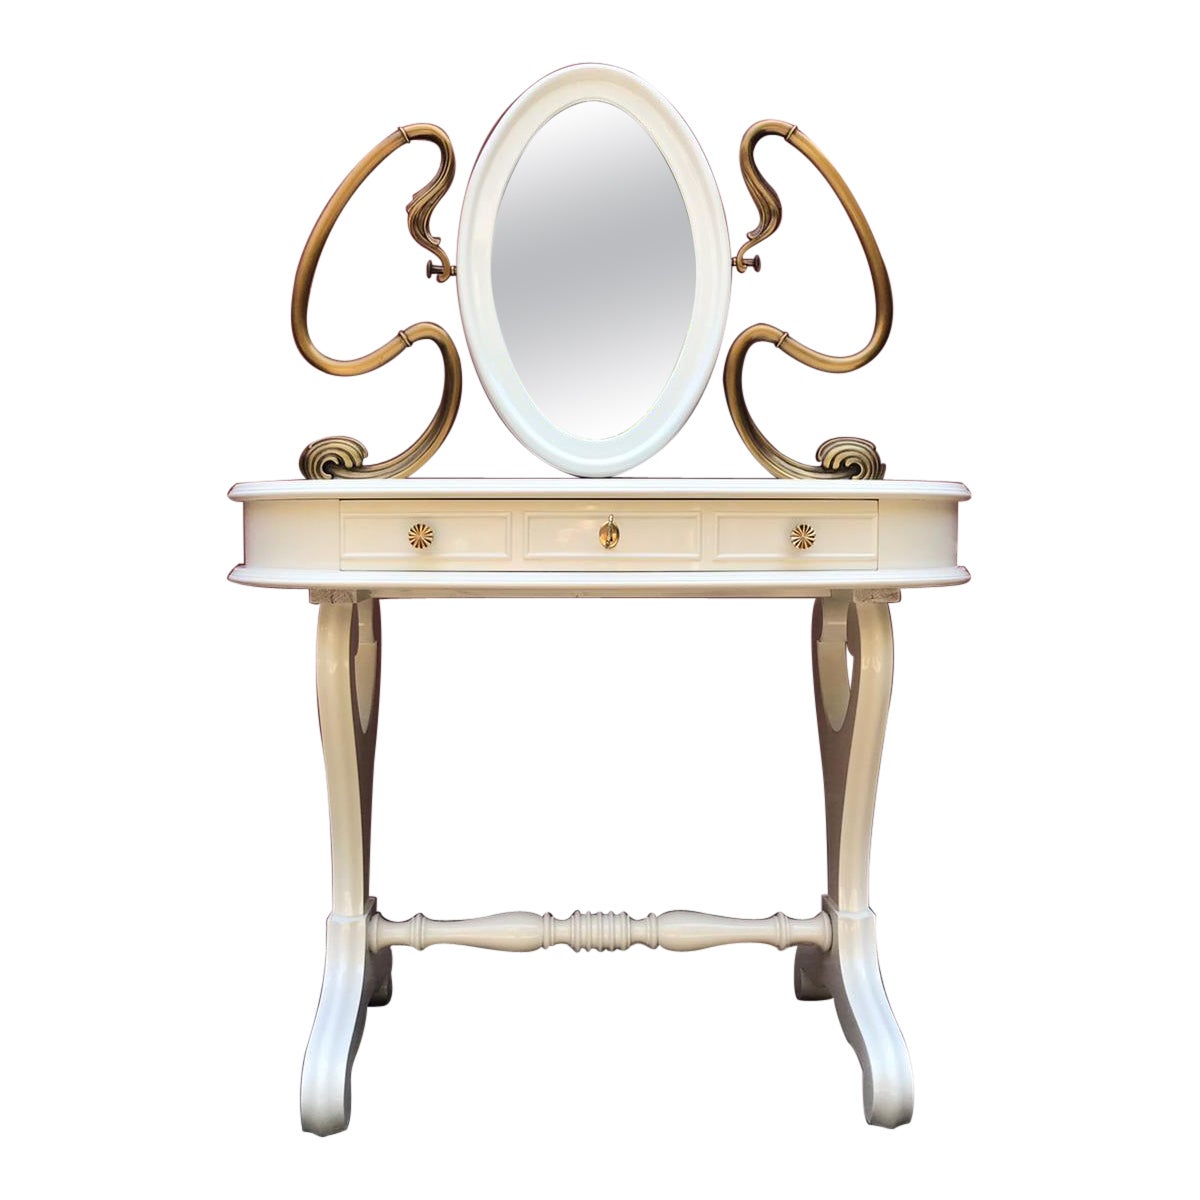 Midcentury Italian Vanity Table or Dressing Table